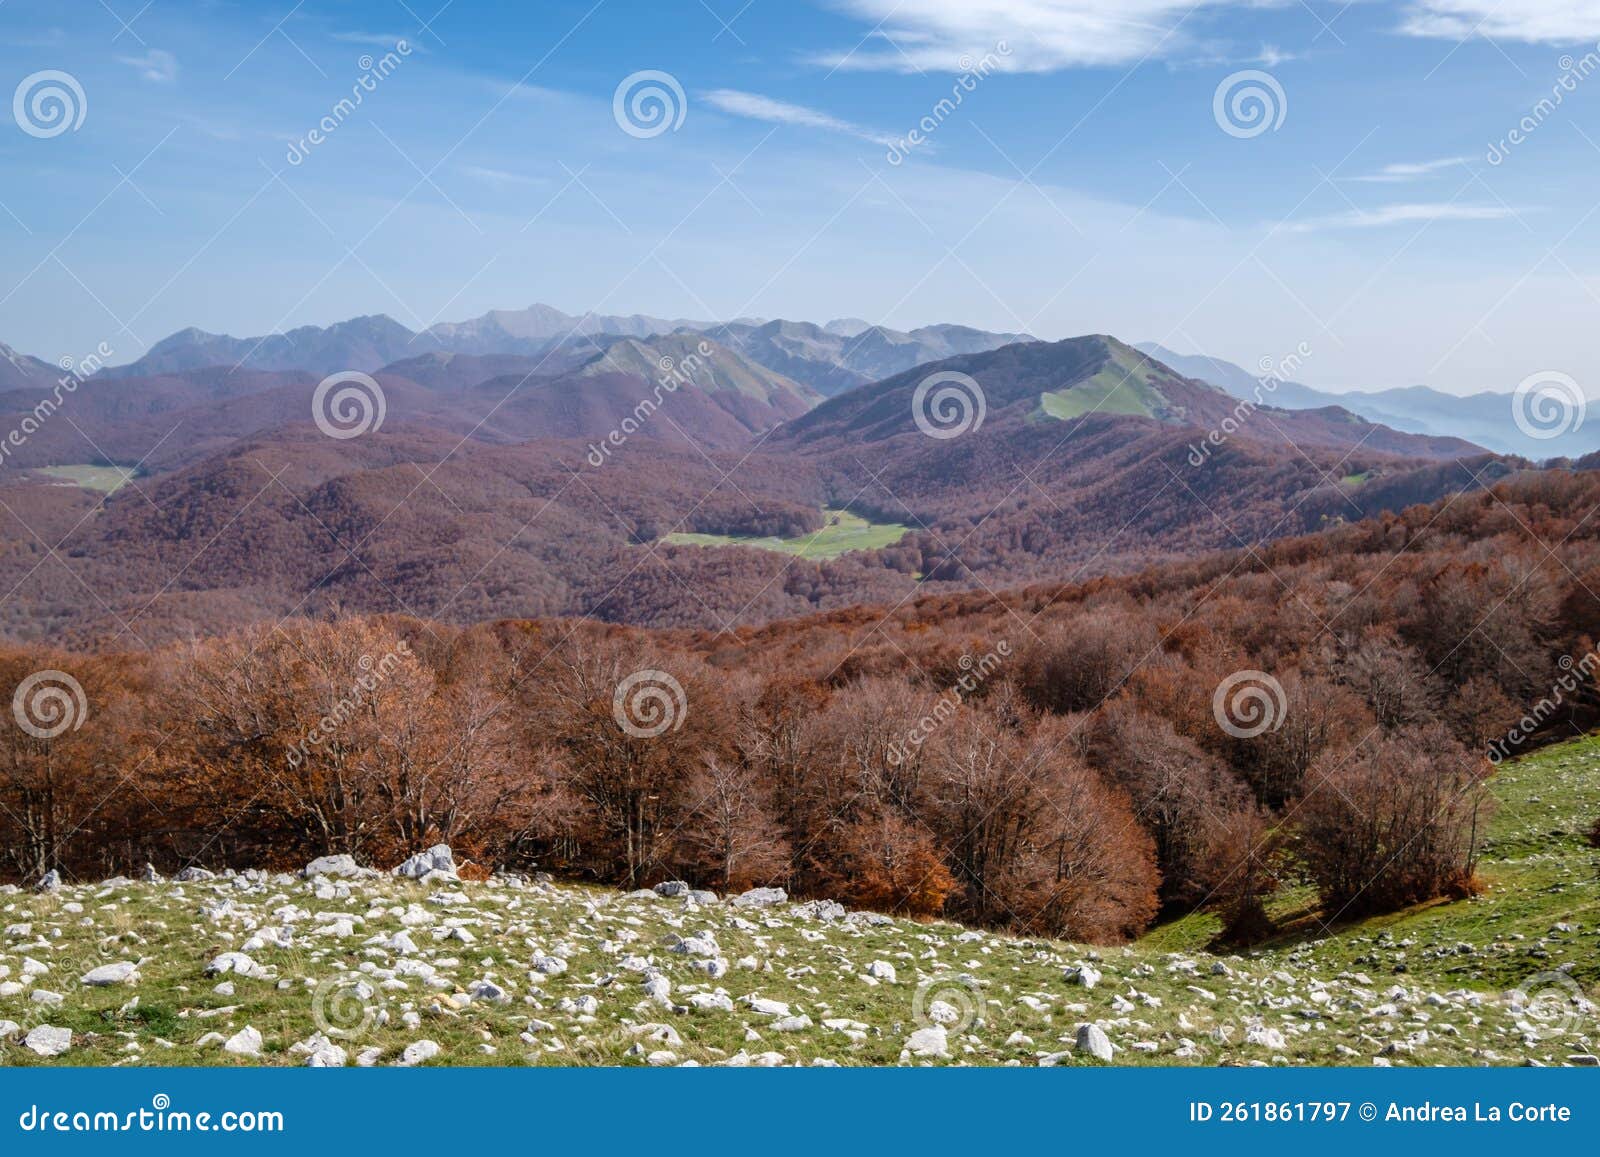 forca d`acero, abruzzo national park, italy